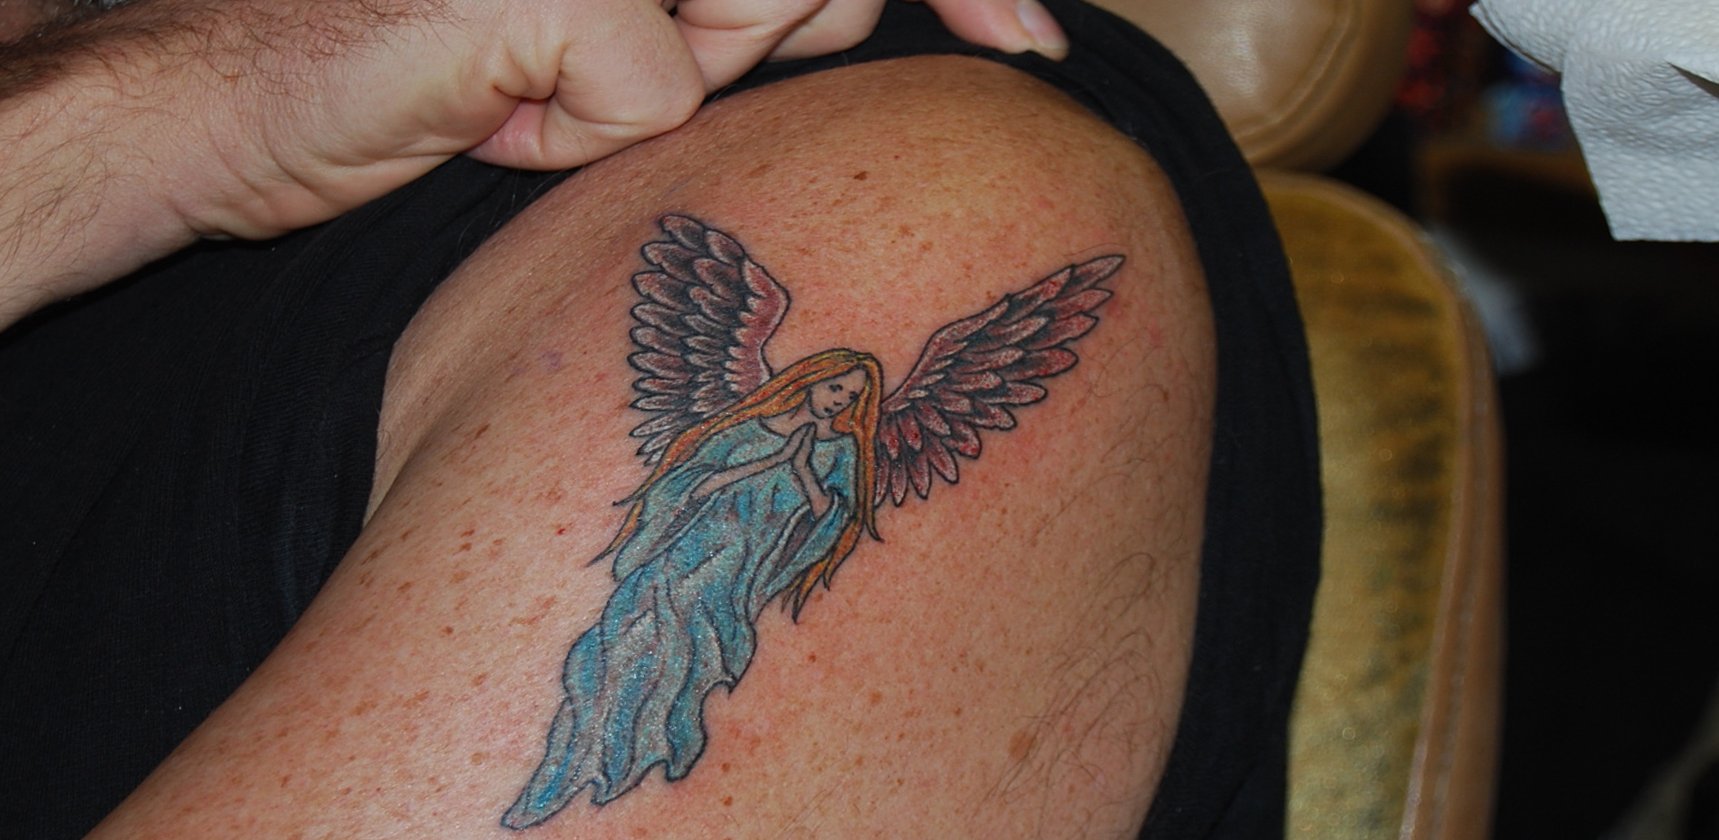 Engel motive tattoos Tattoo Ideas